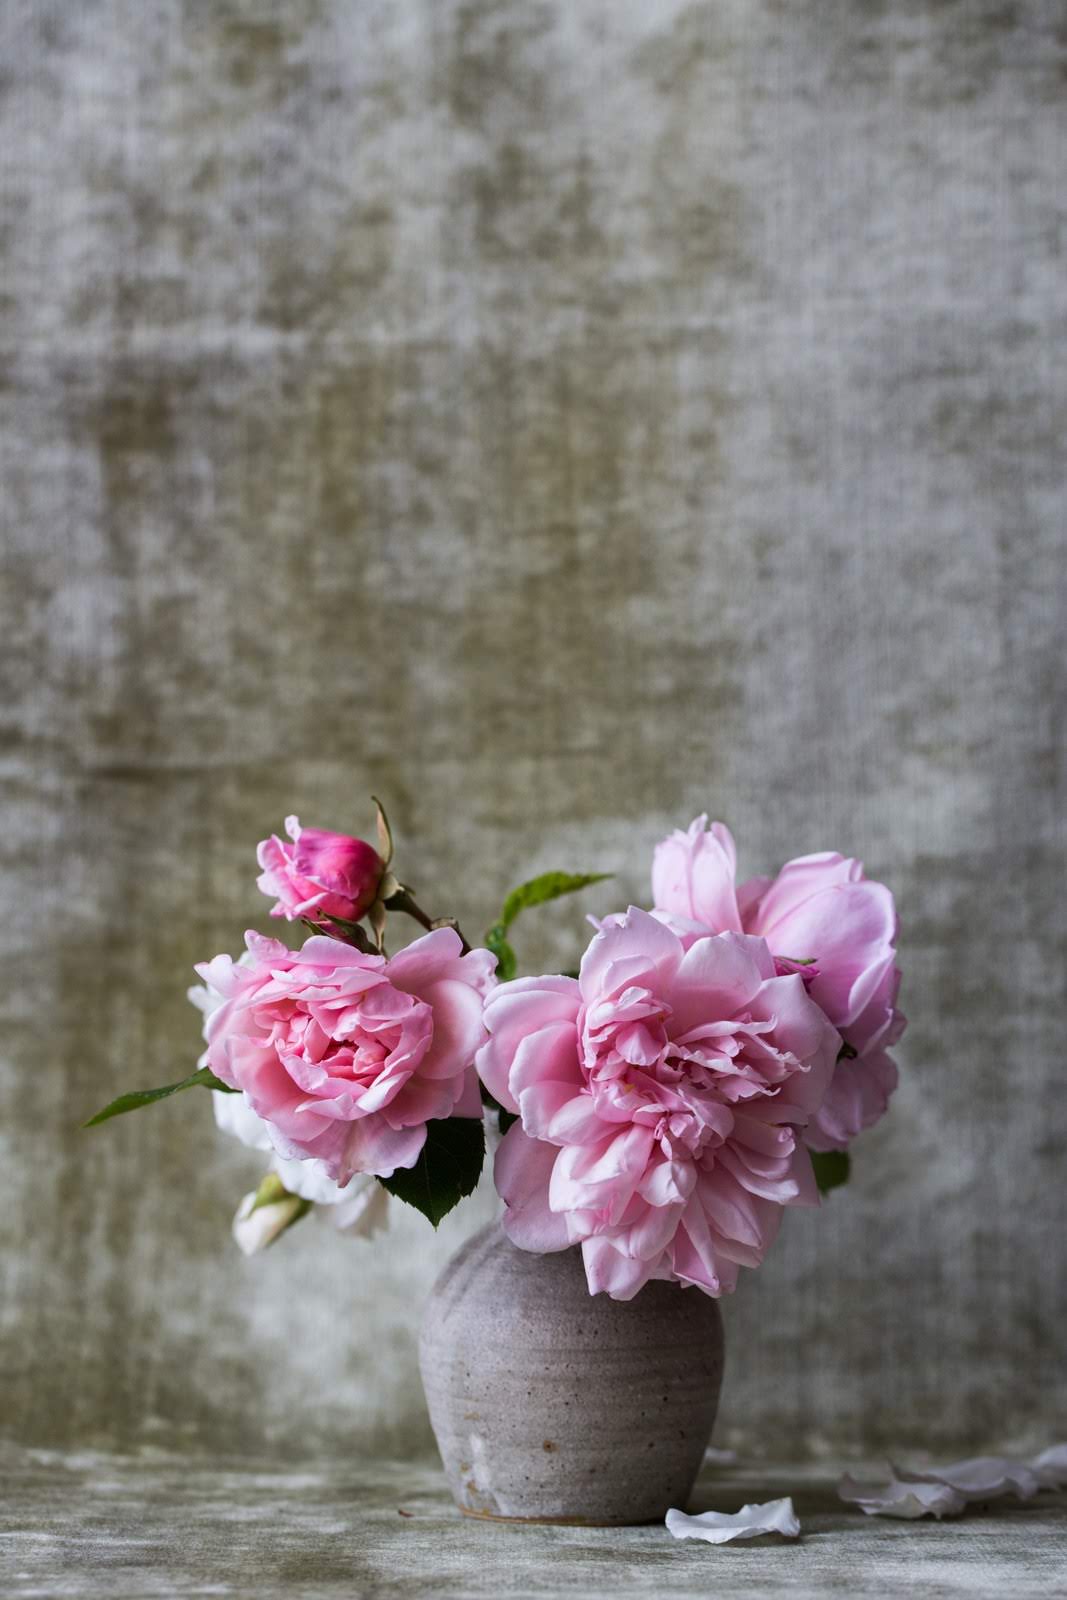 Pink Flowers on Gray Ceramic Vase | Photo by Alexandra Seinet via Unsplash